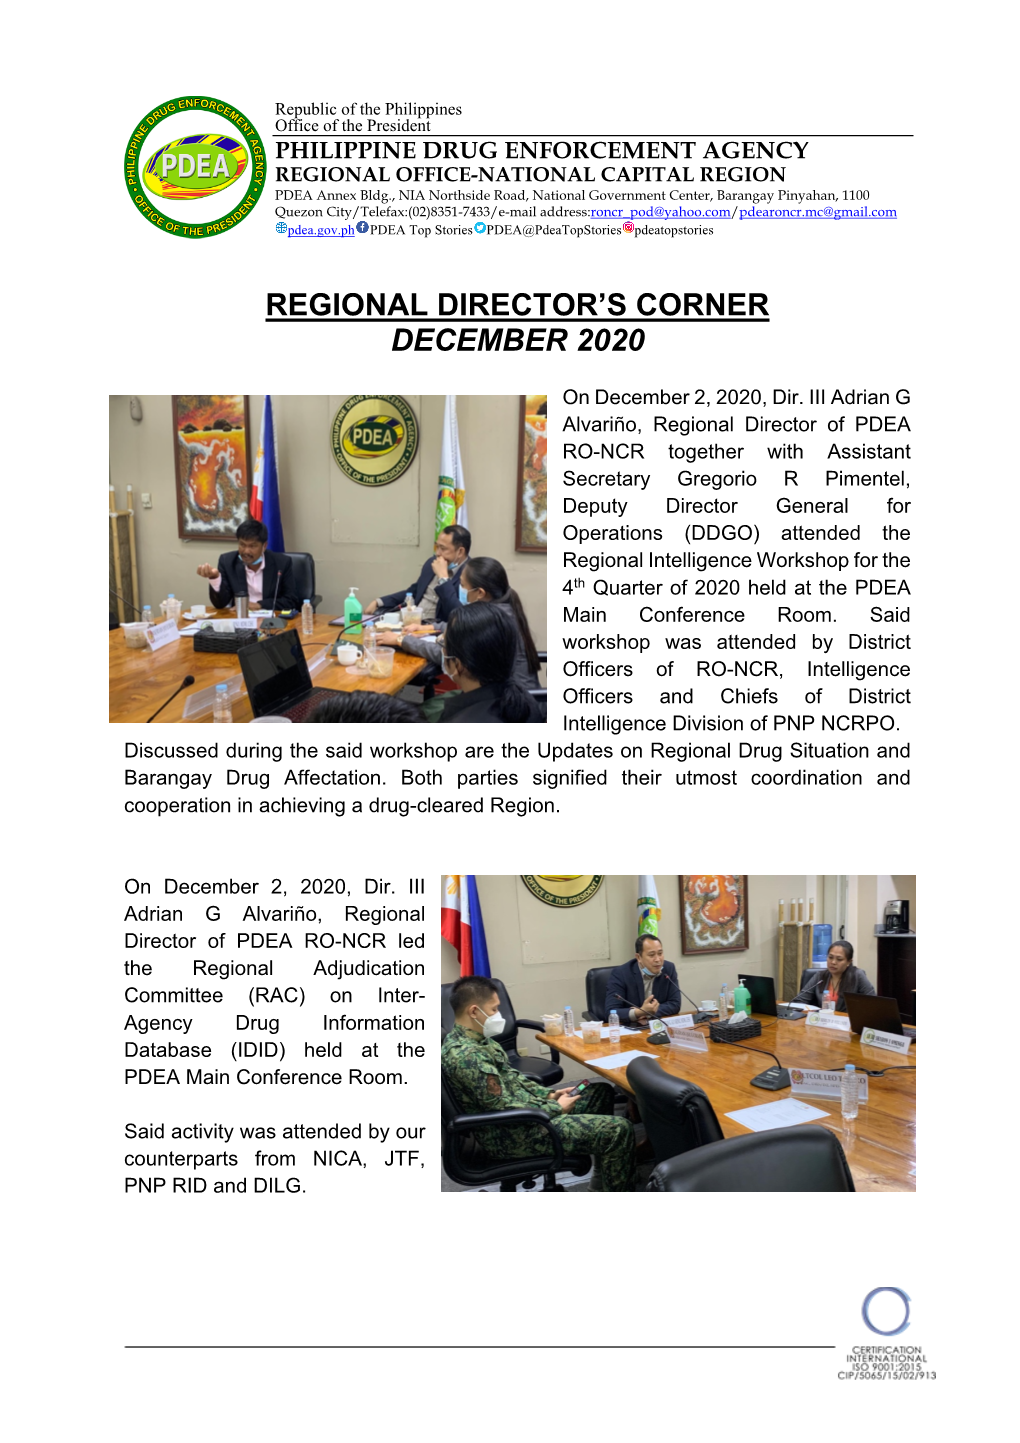 Regional Director's Corner December 2020